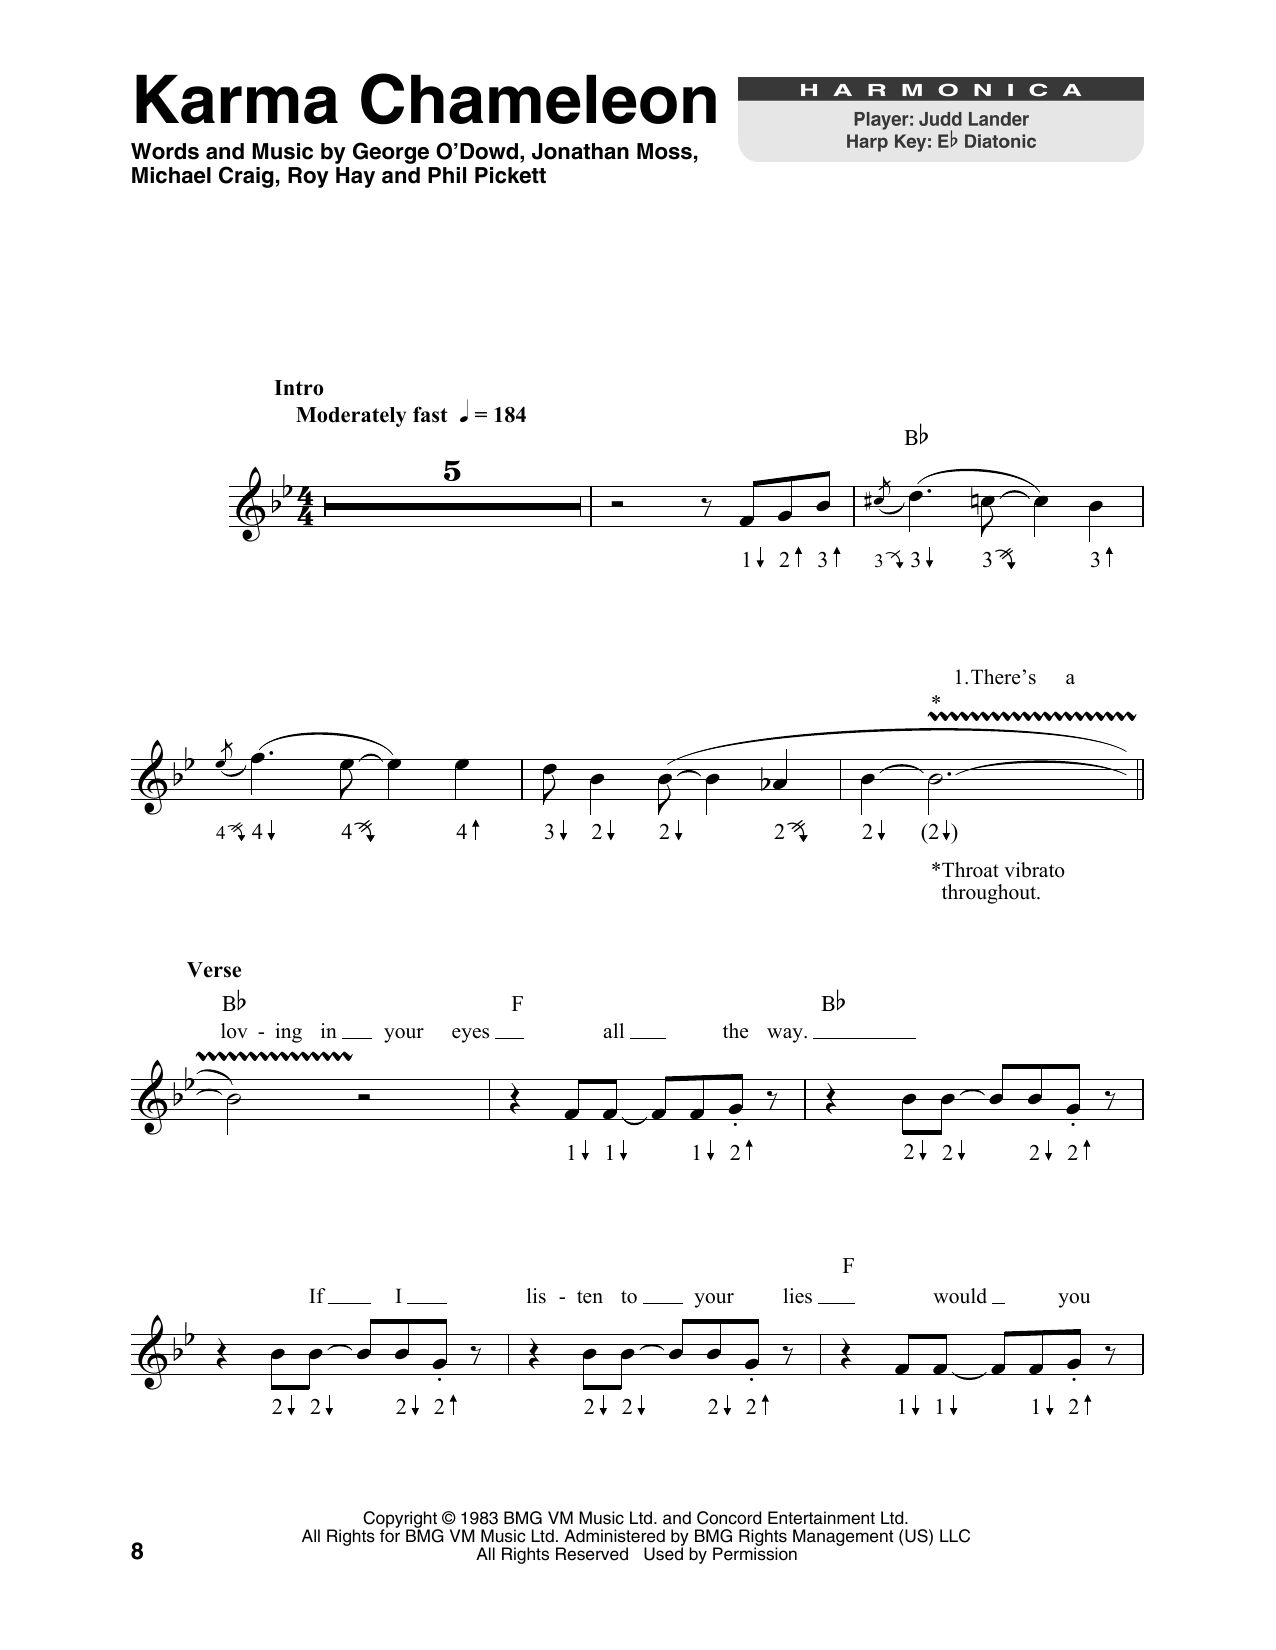 Culture Club Karma Chameleon sheet music notes printable PDF score